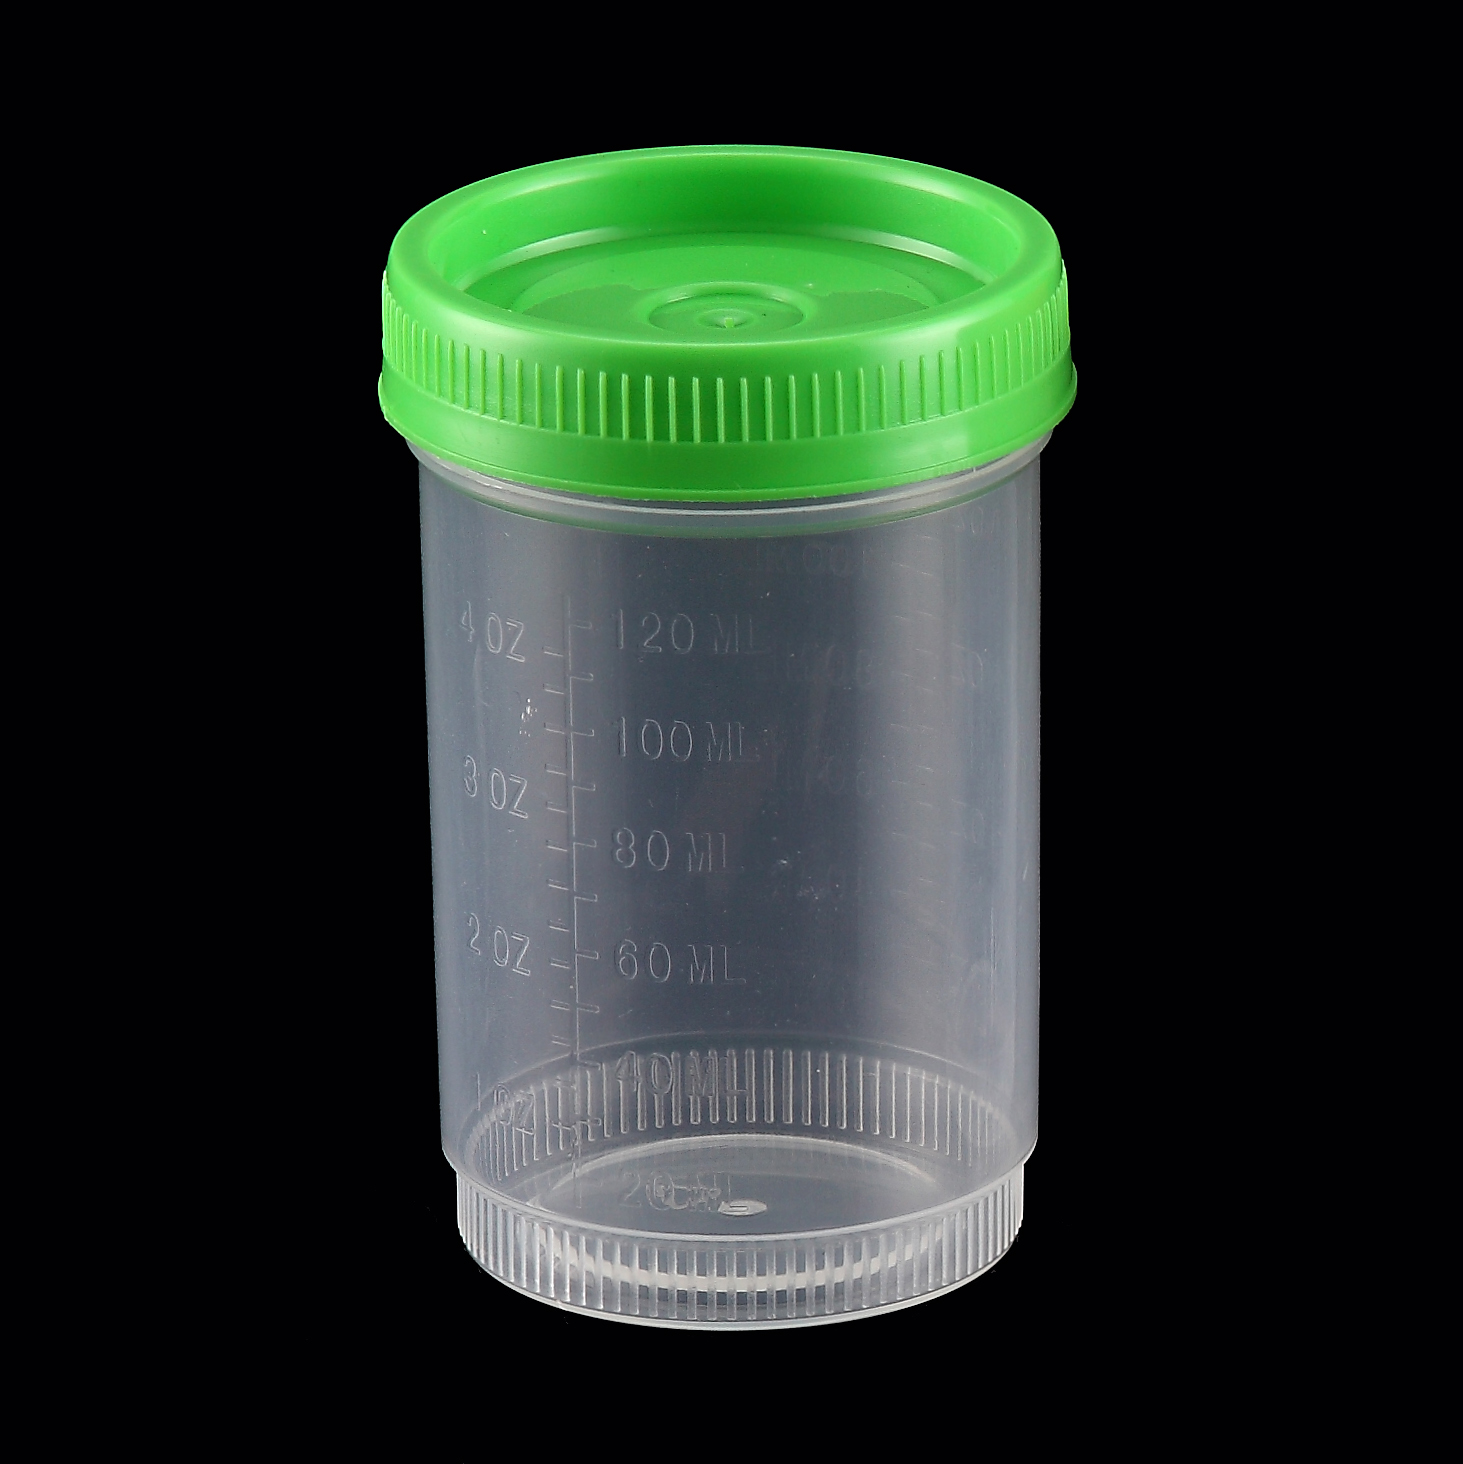 Microbiology/Urinalysis Specimen Containers, Screw Cap,4OZ/120ml